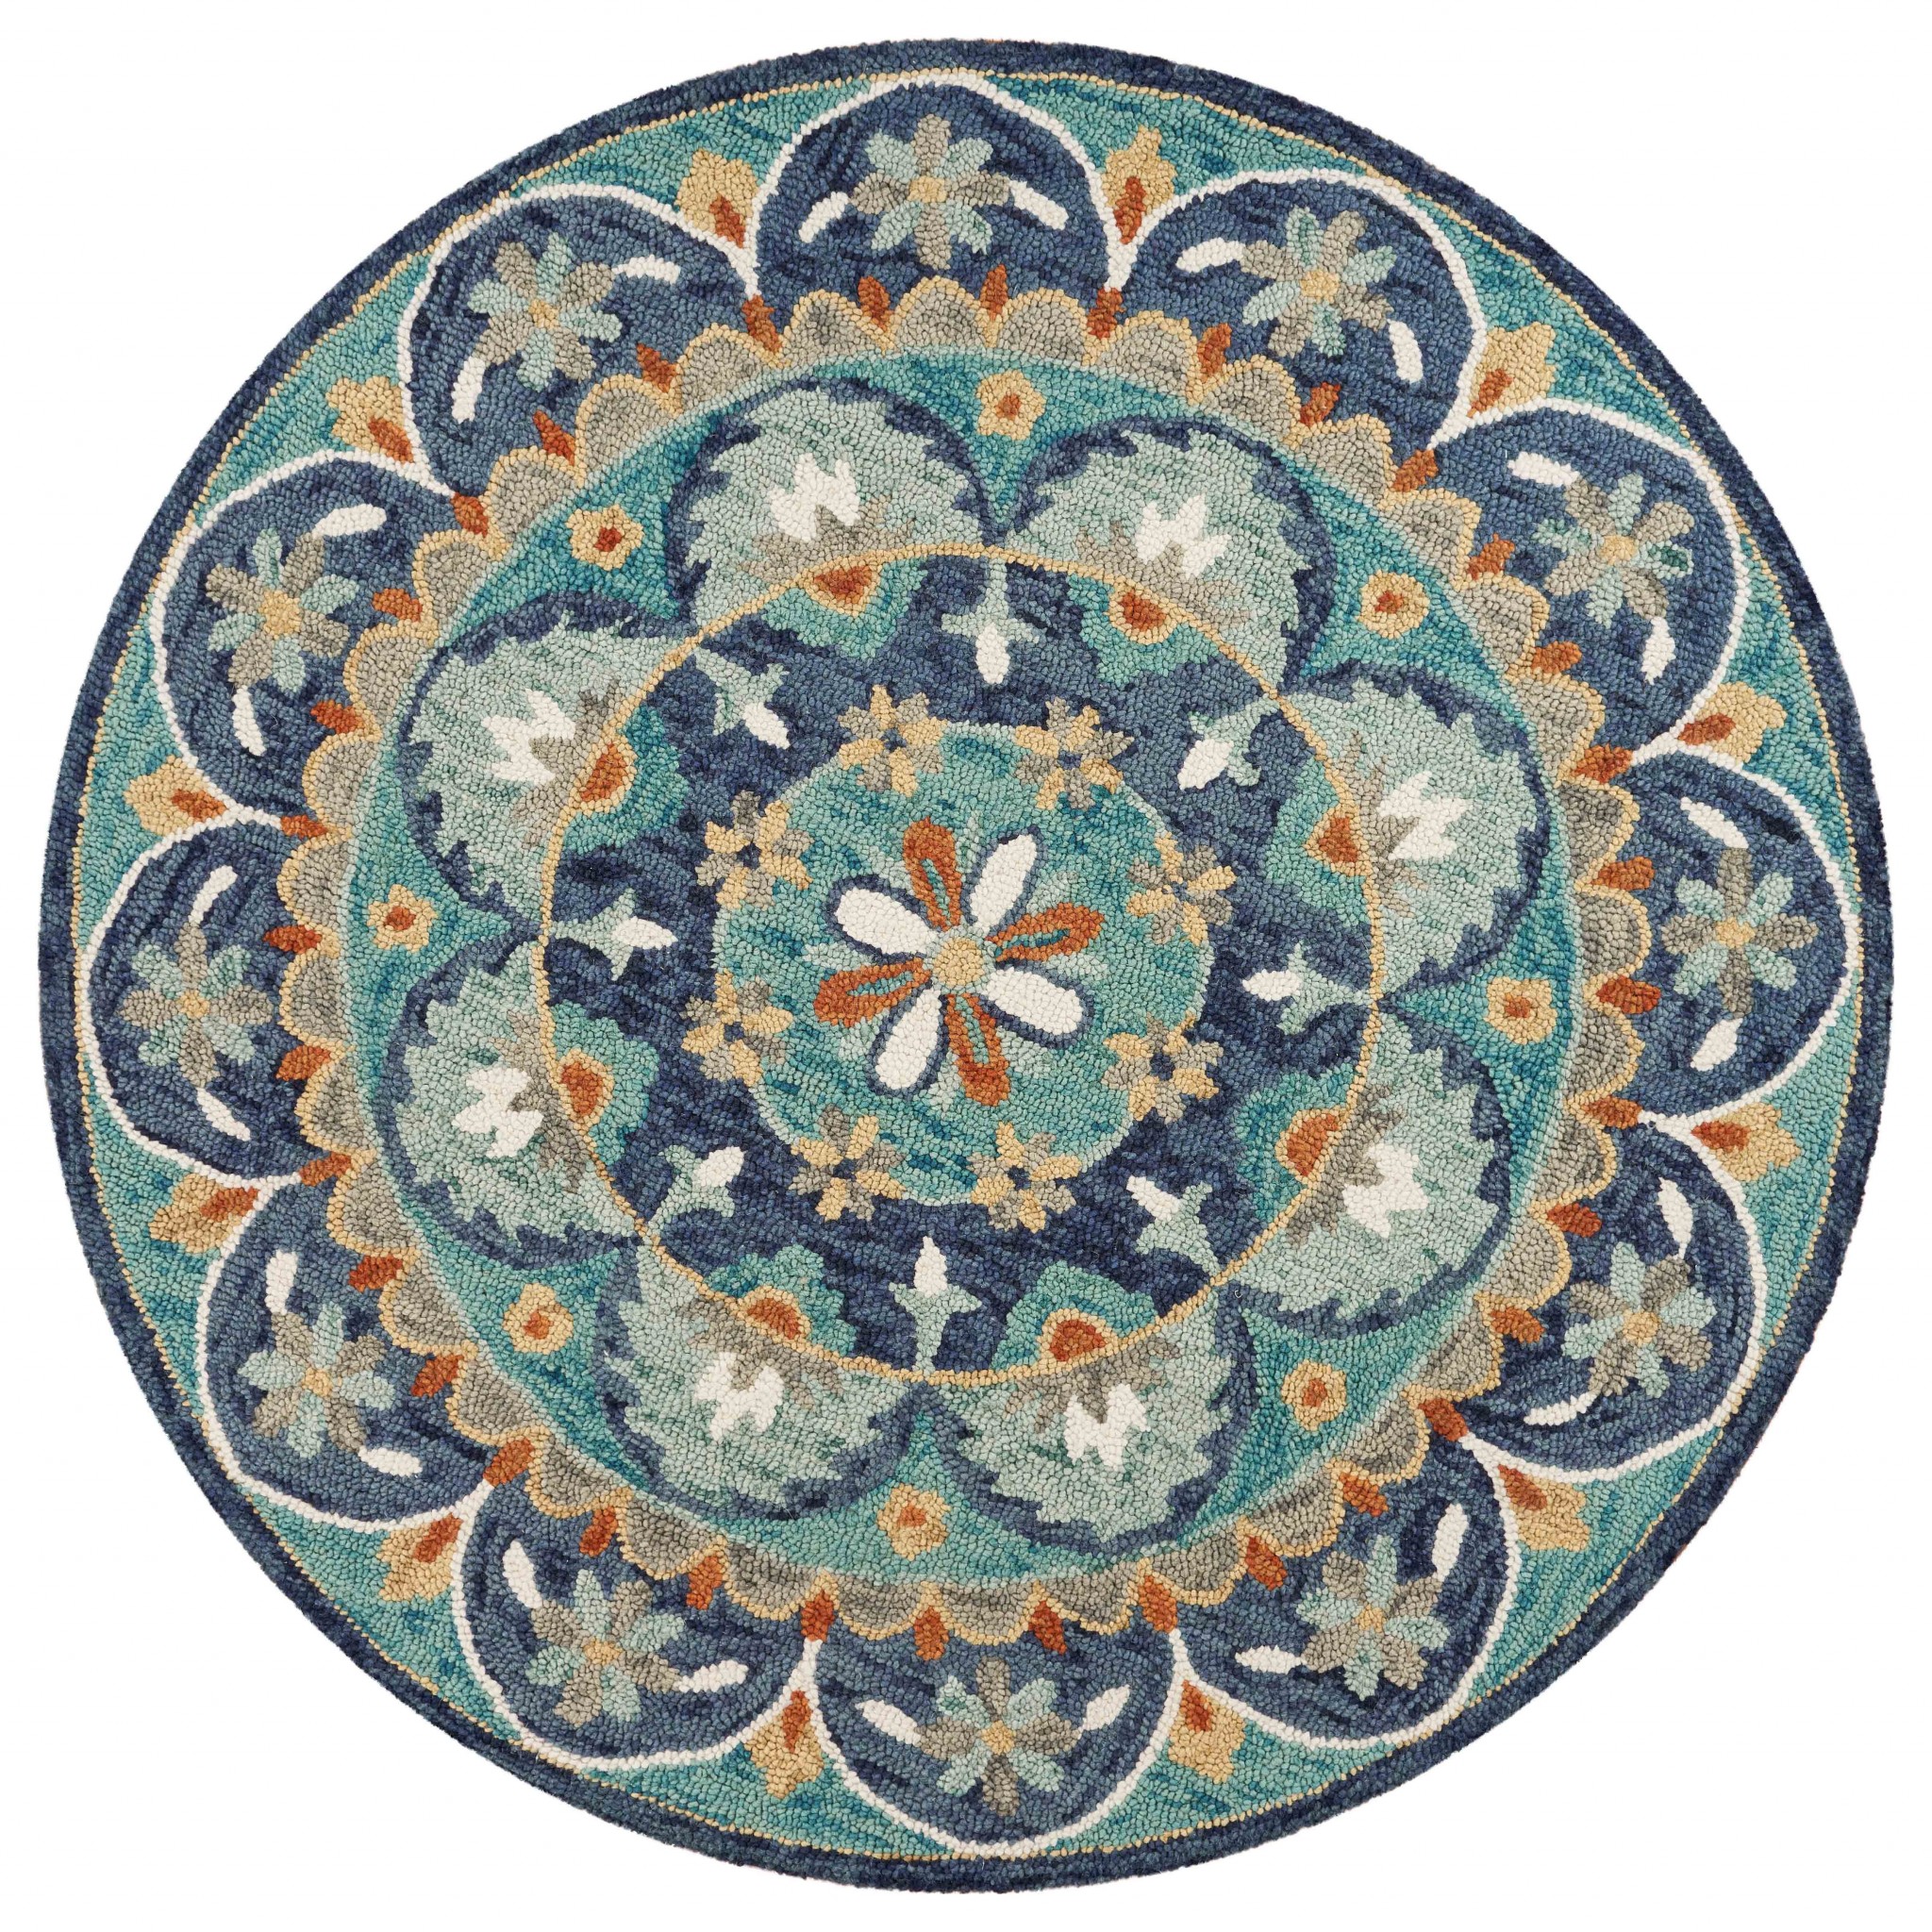 4’ Round Blue Floral Mandala Area Rug-393683-1